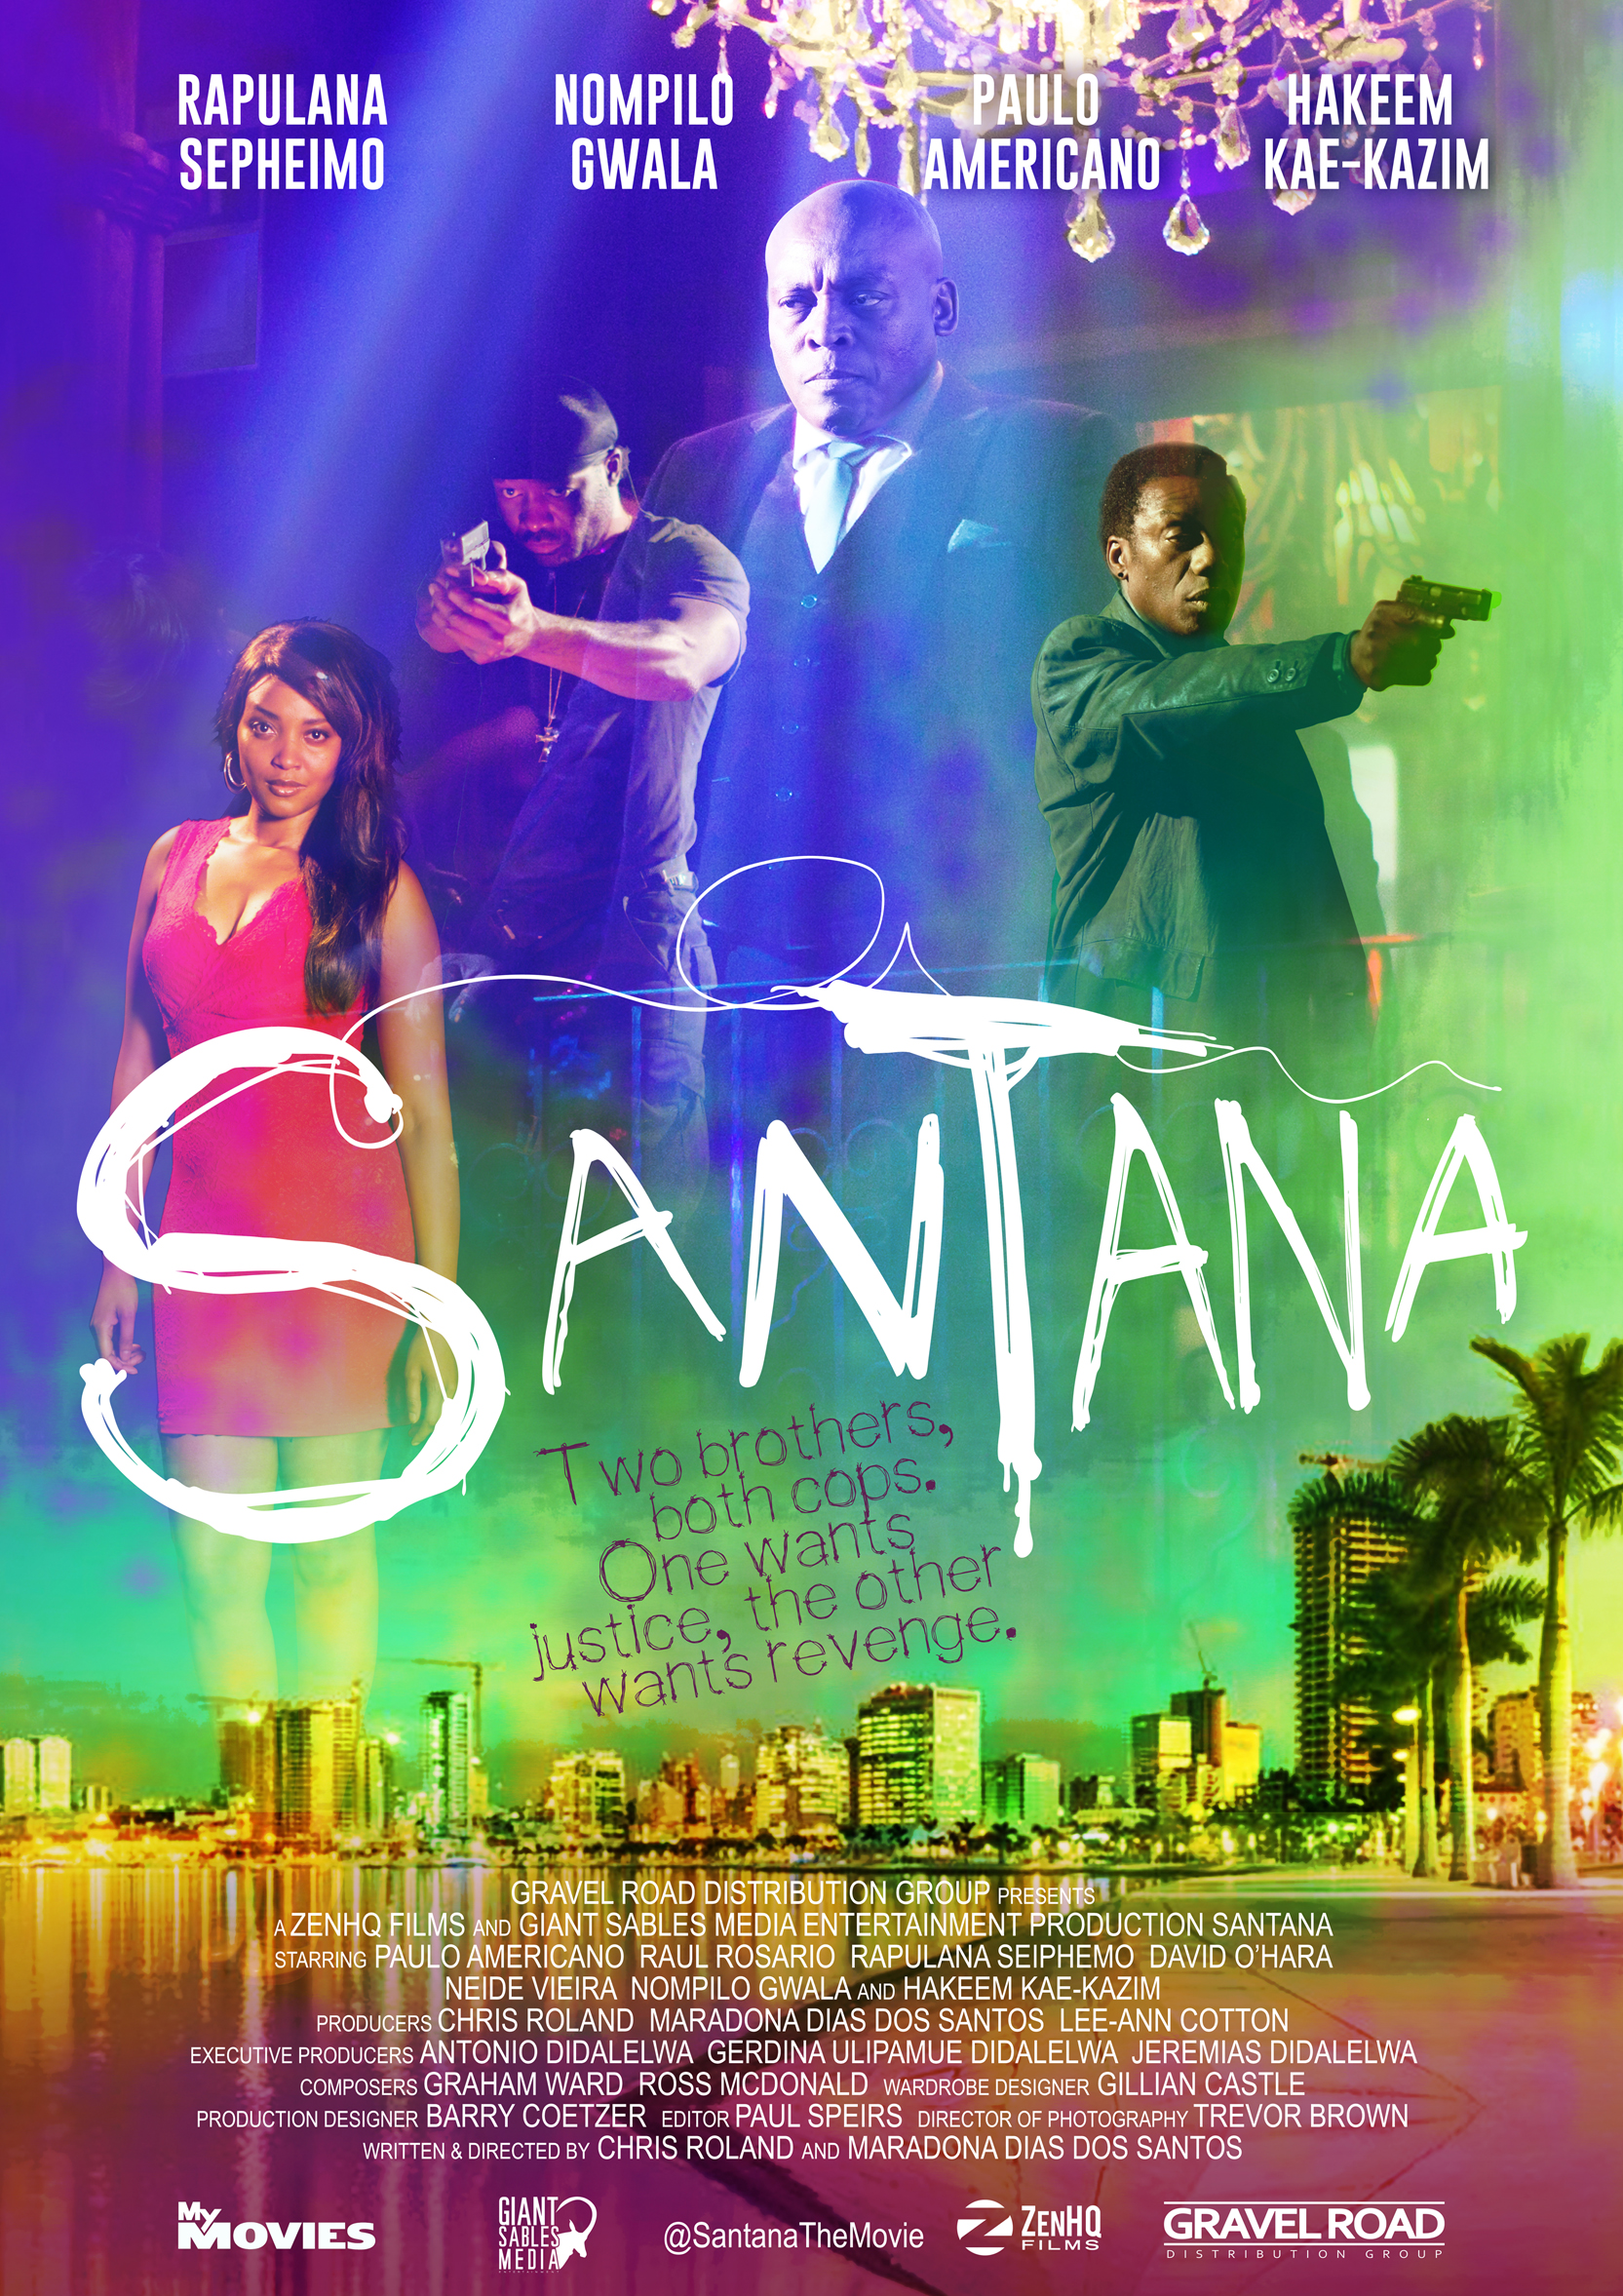 Nonton film Santana layarkaca21 indoxx1 ganool online streaming terbaru